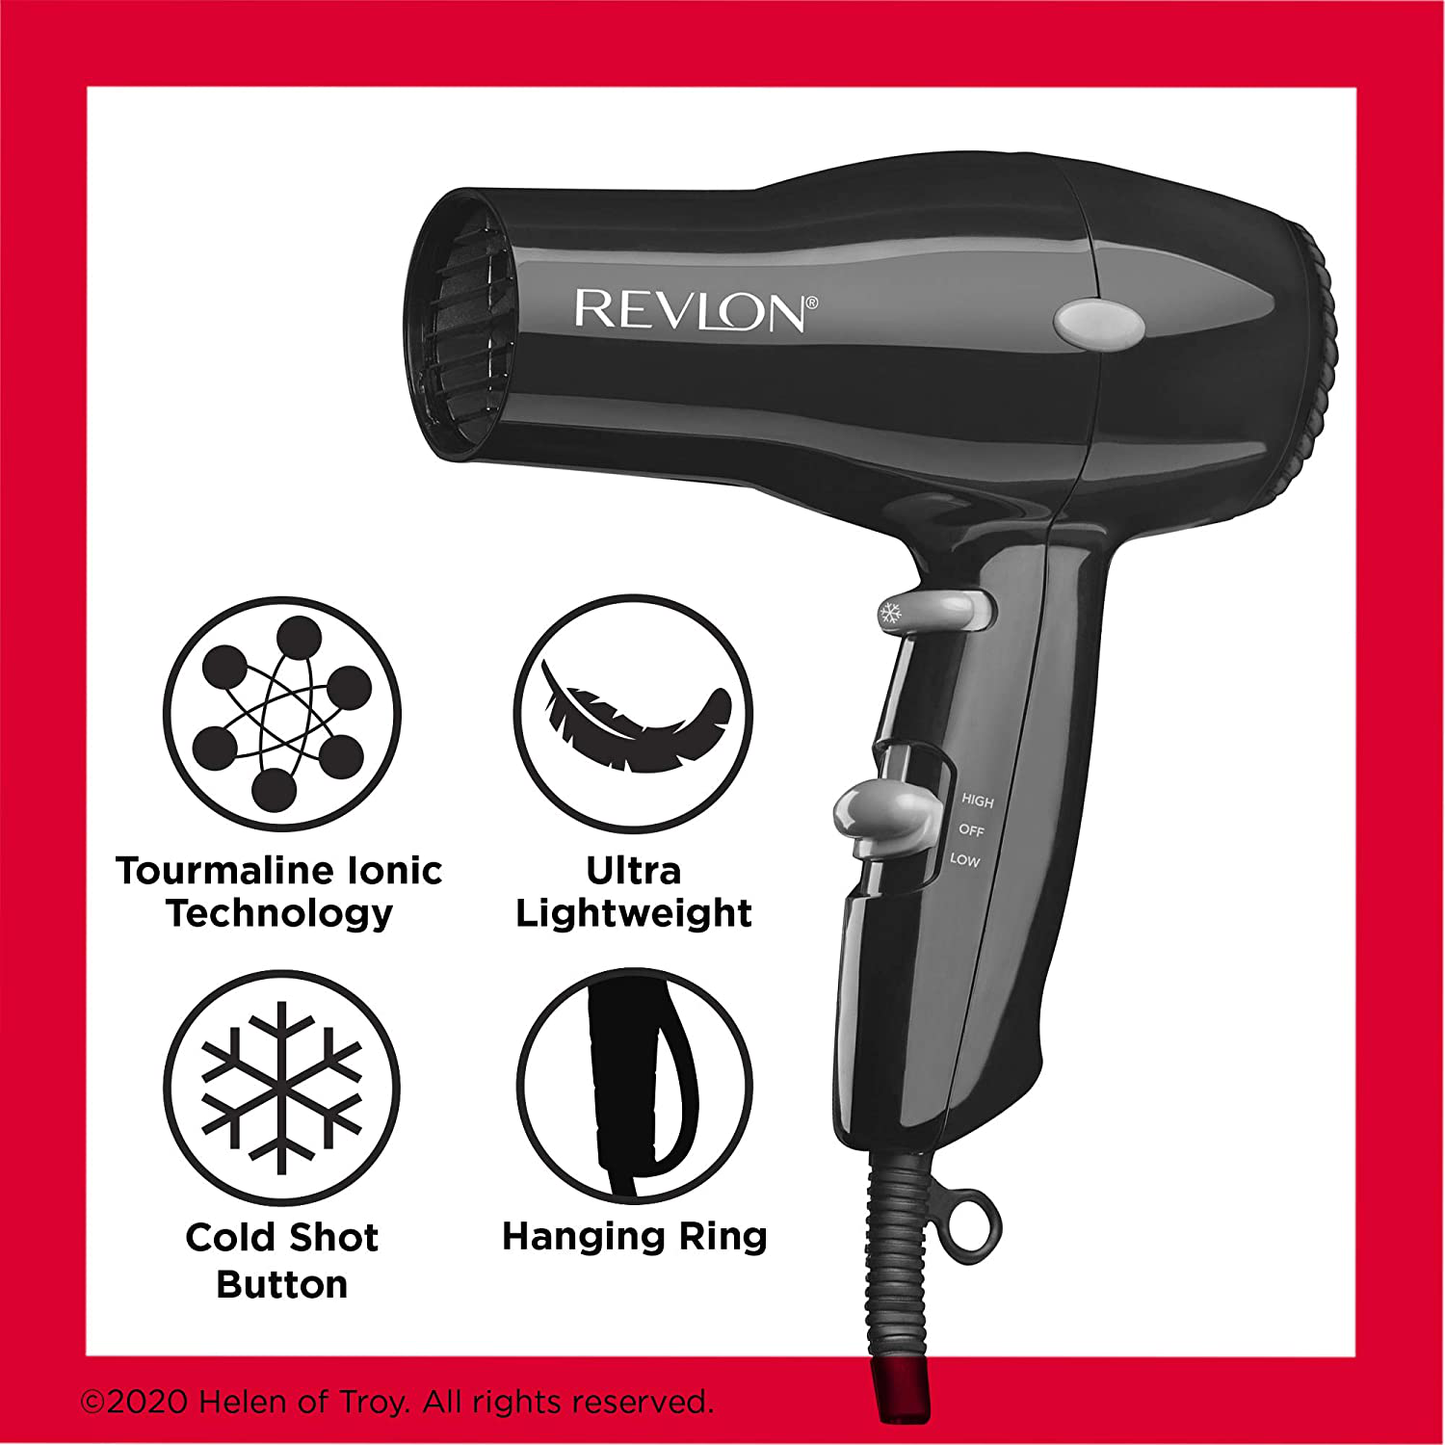 REVLON The Essential, Lightweight + Compact Travel Hair Dryer